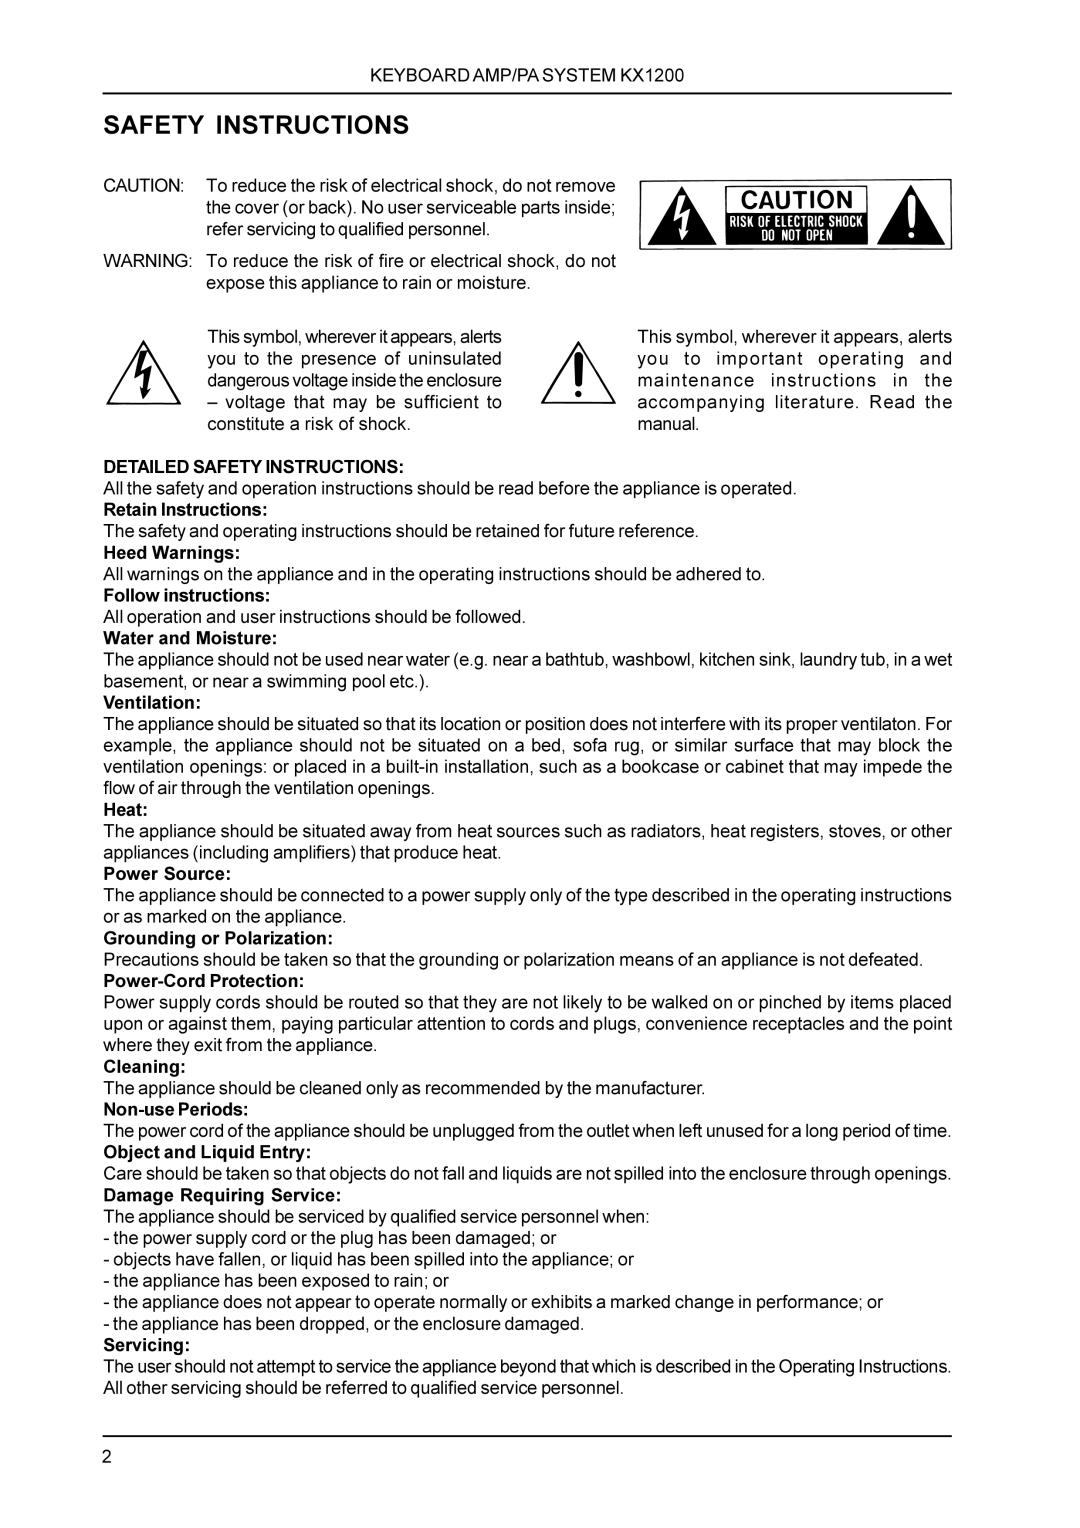 Behringer KX1200 manual Safety Instructions 